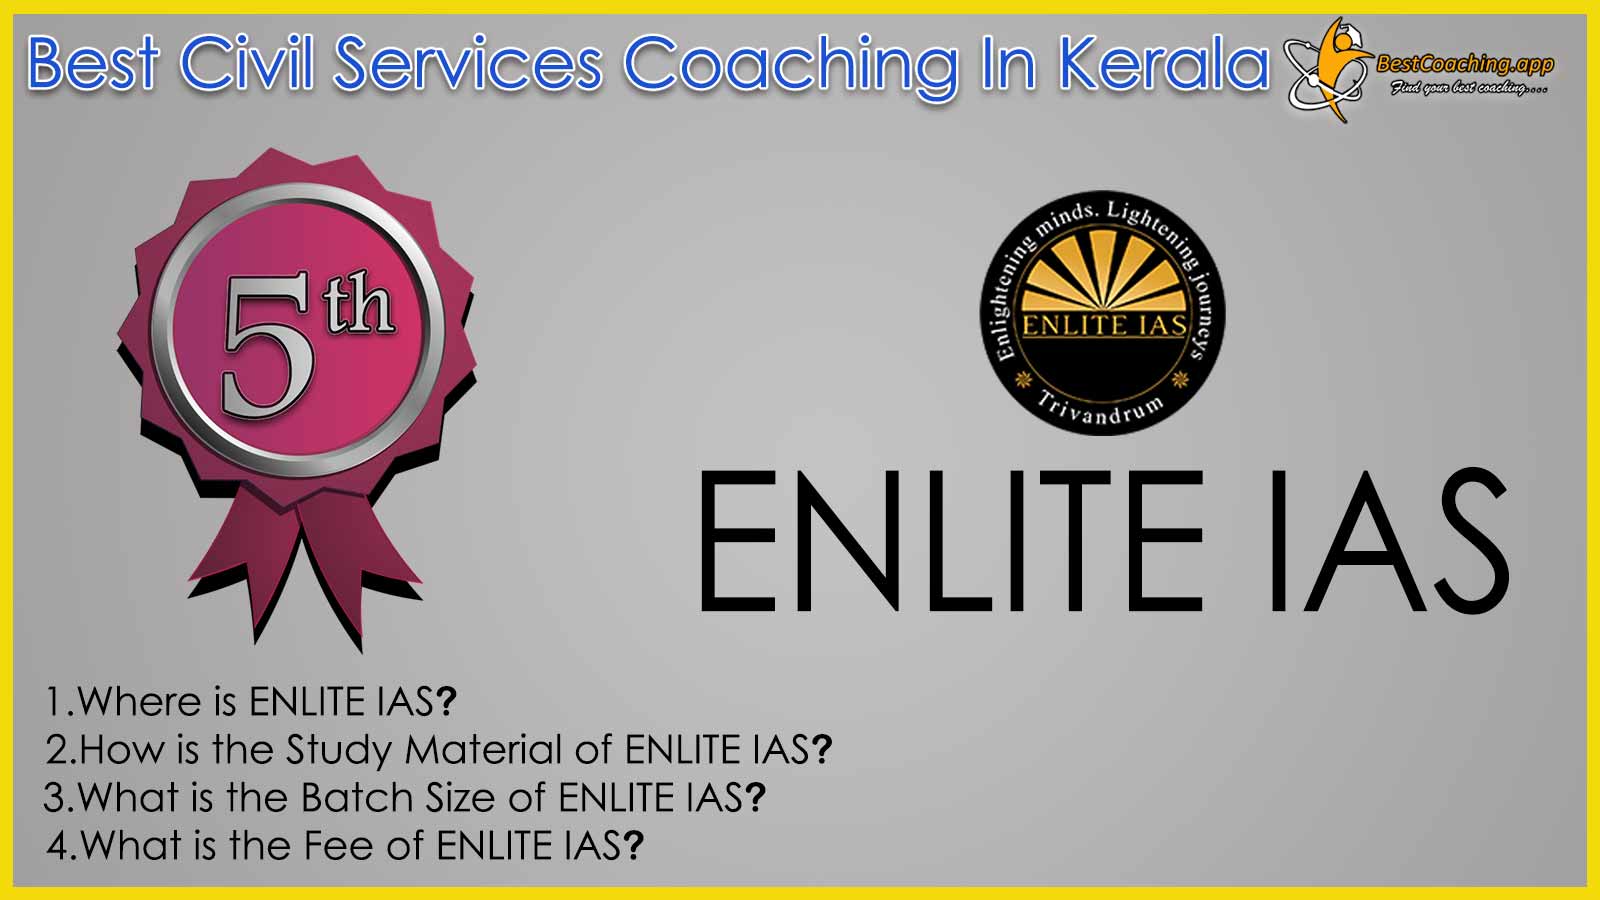 Enlite IAS Coaching